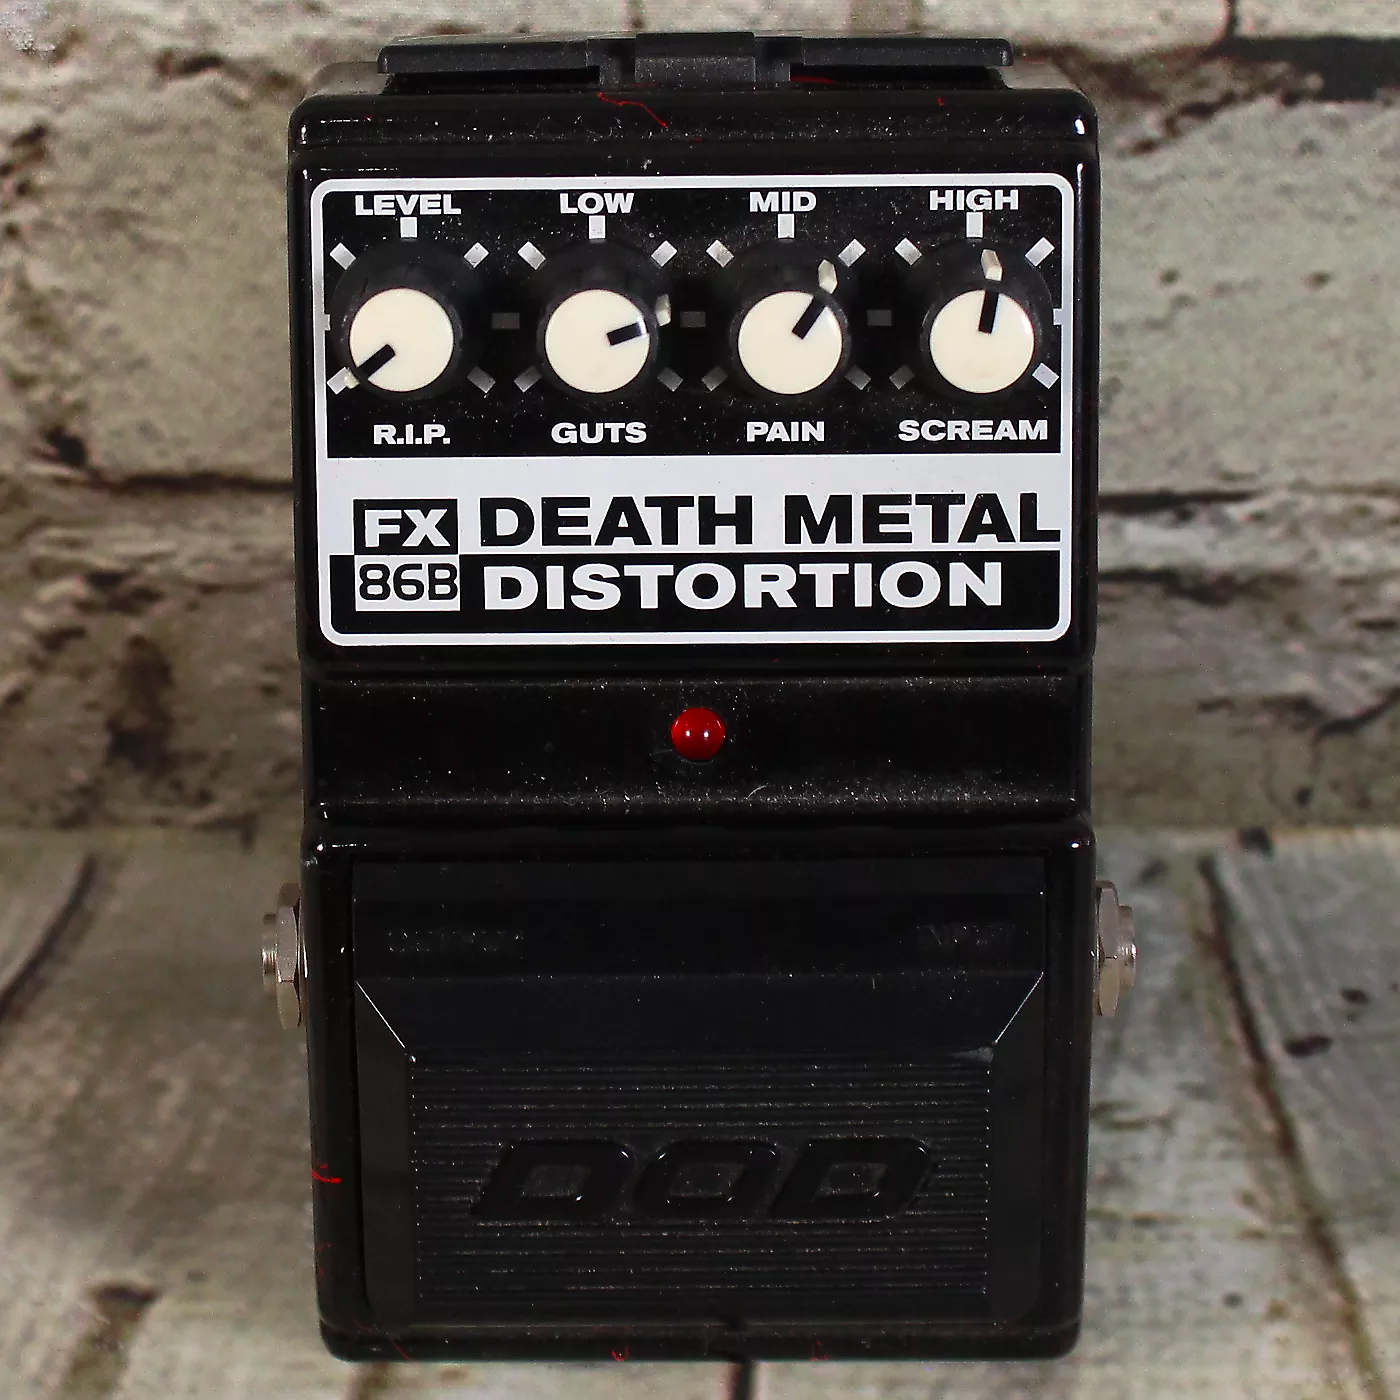 DOD Death Metal Distortion FX86B | Reverb